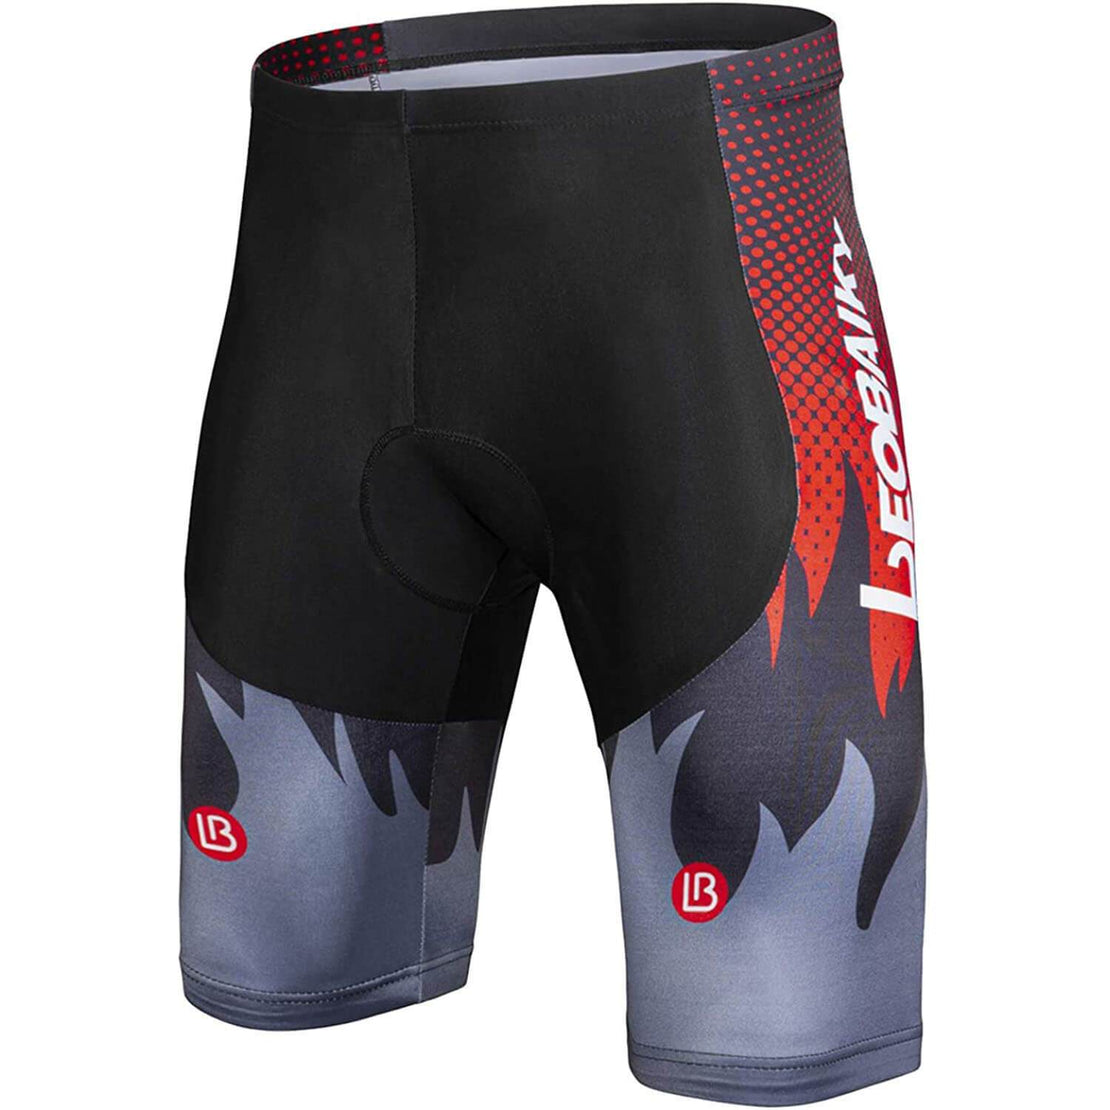 Men's 4D Coolmax Pad Anti-Slip Cycling Tights Shorts